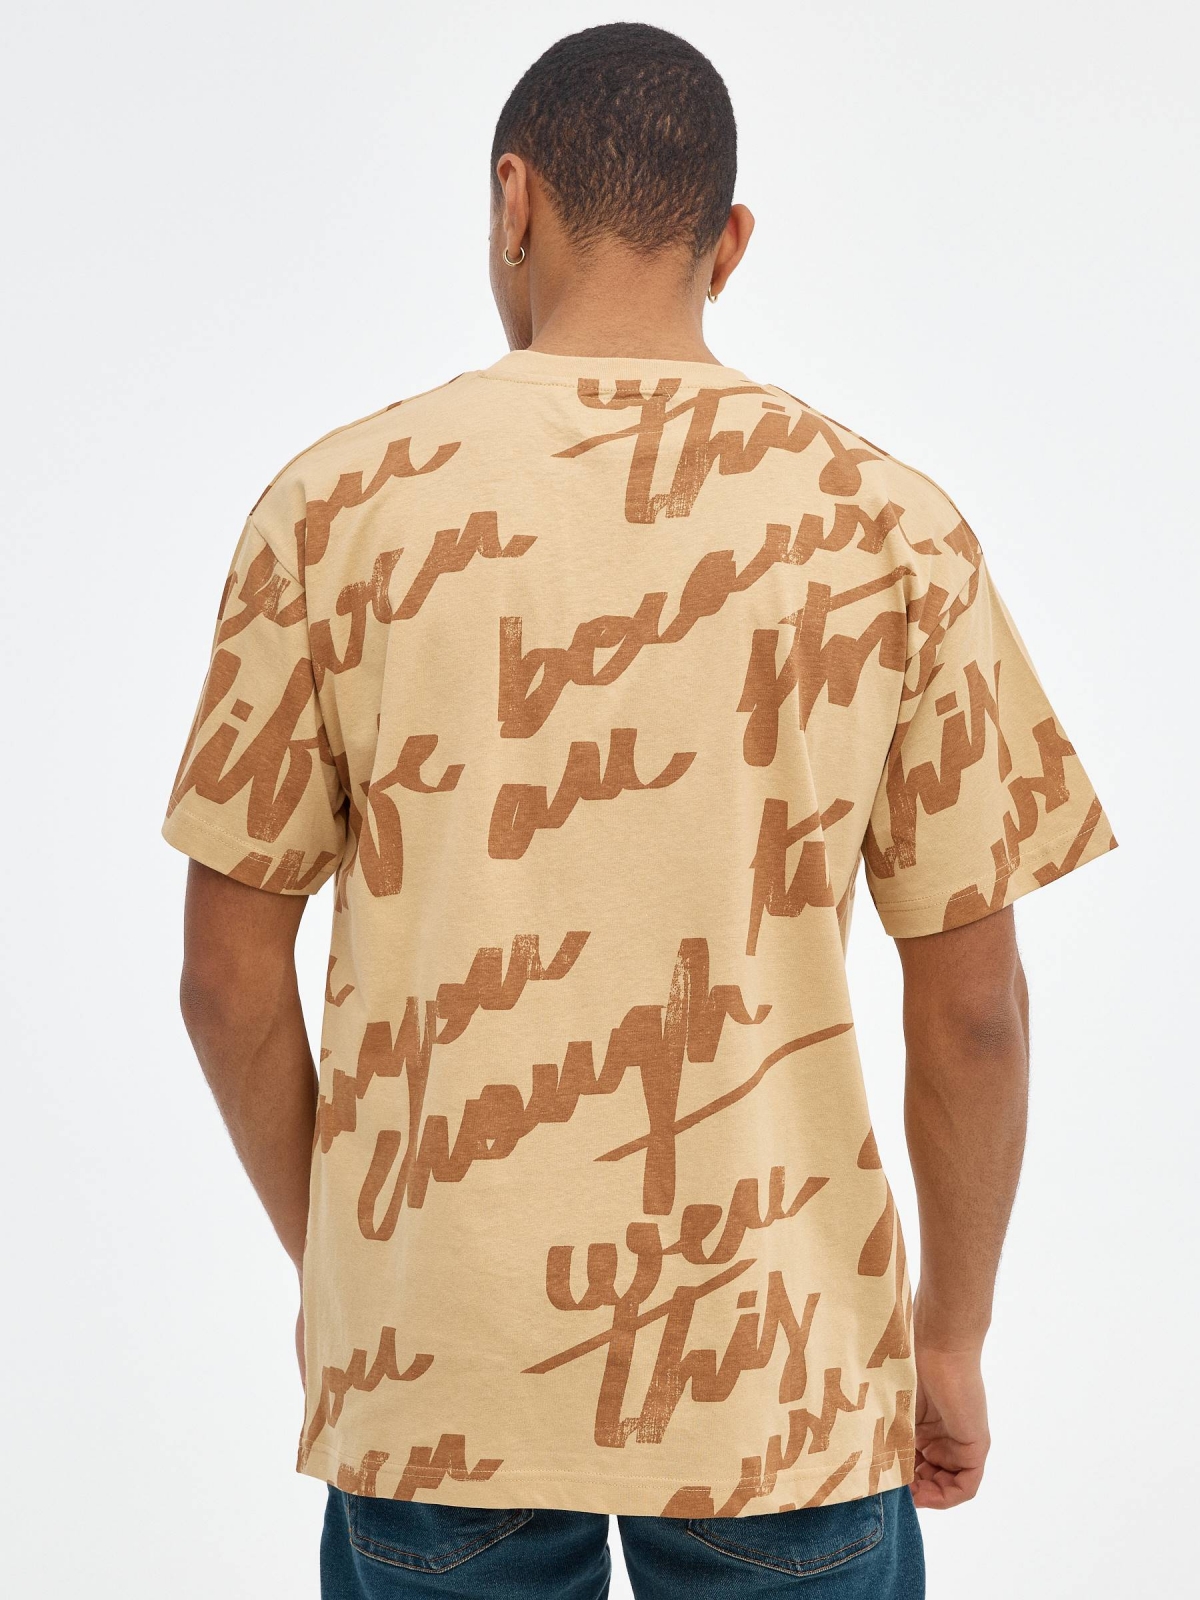 Camiseta print de texto marrón tierra vista media trasera